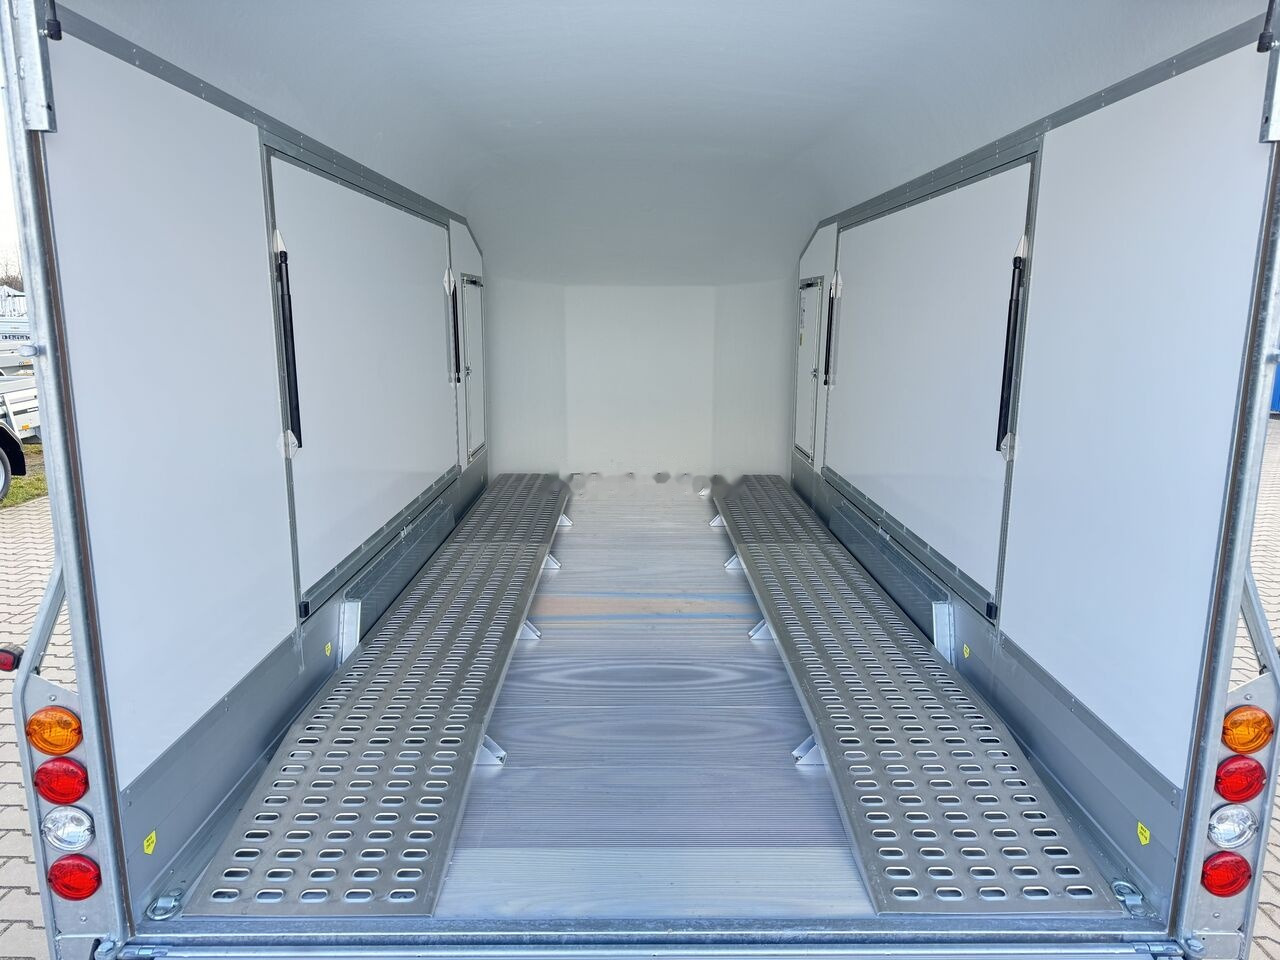 Autotransporter trailer Debon C1000 van cargo 3500 kg closed car trailer 500x200cm 2x doors: picture 25